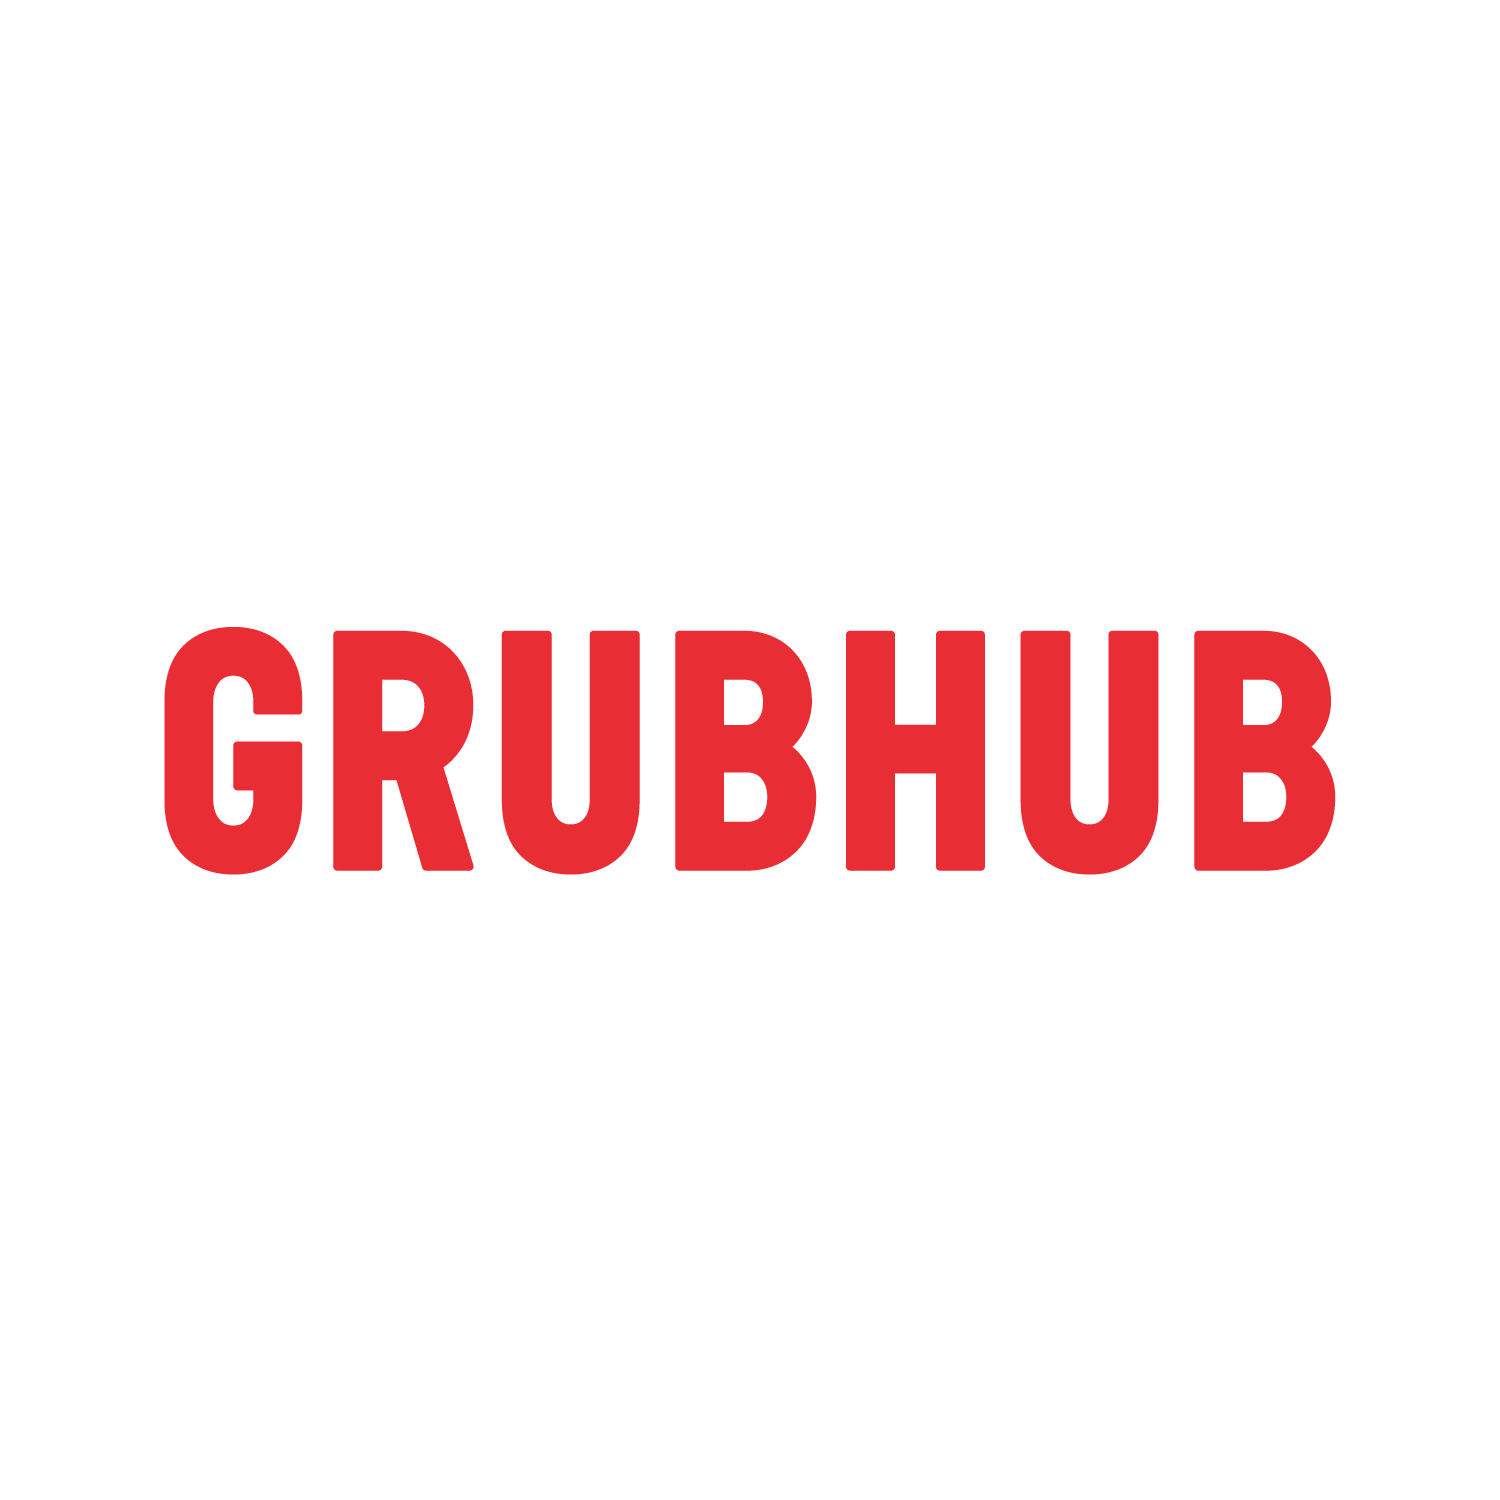 grubhub logo square